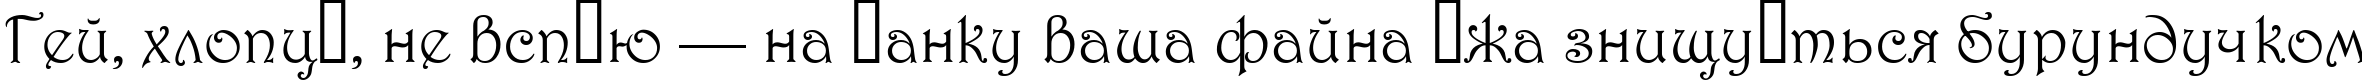 Пример написания шрифтом 1 Harrington M текста на украинском